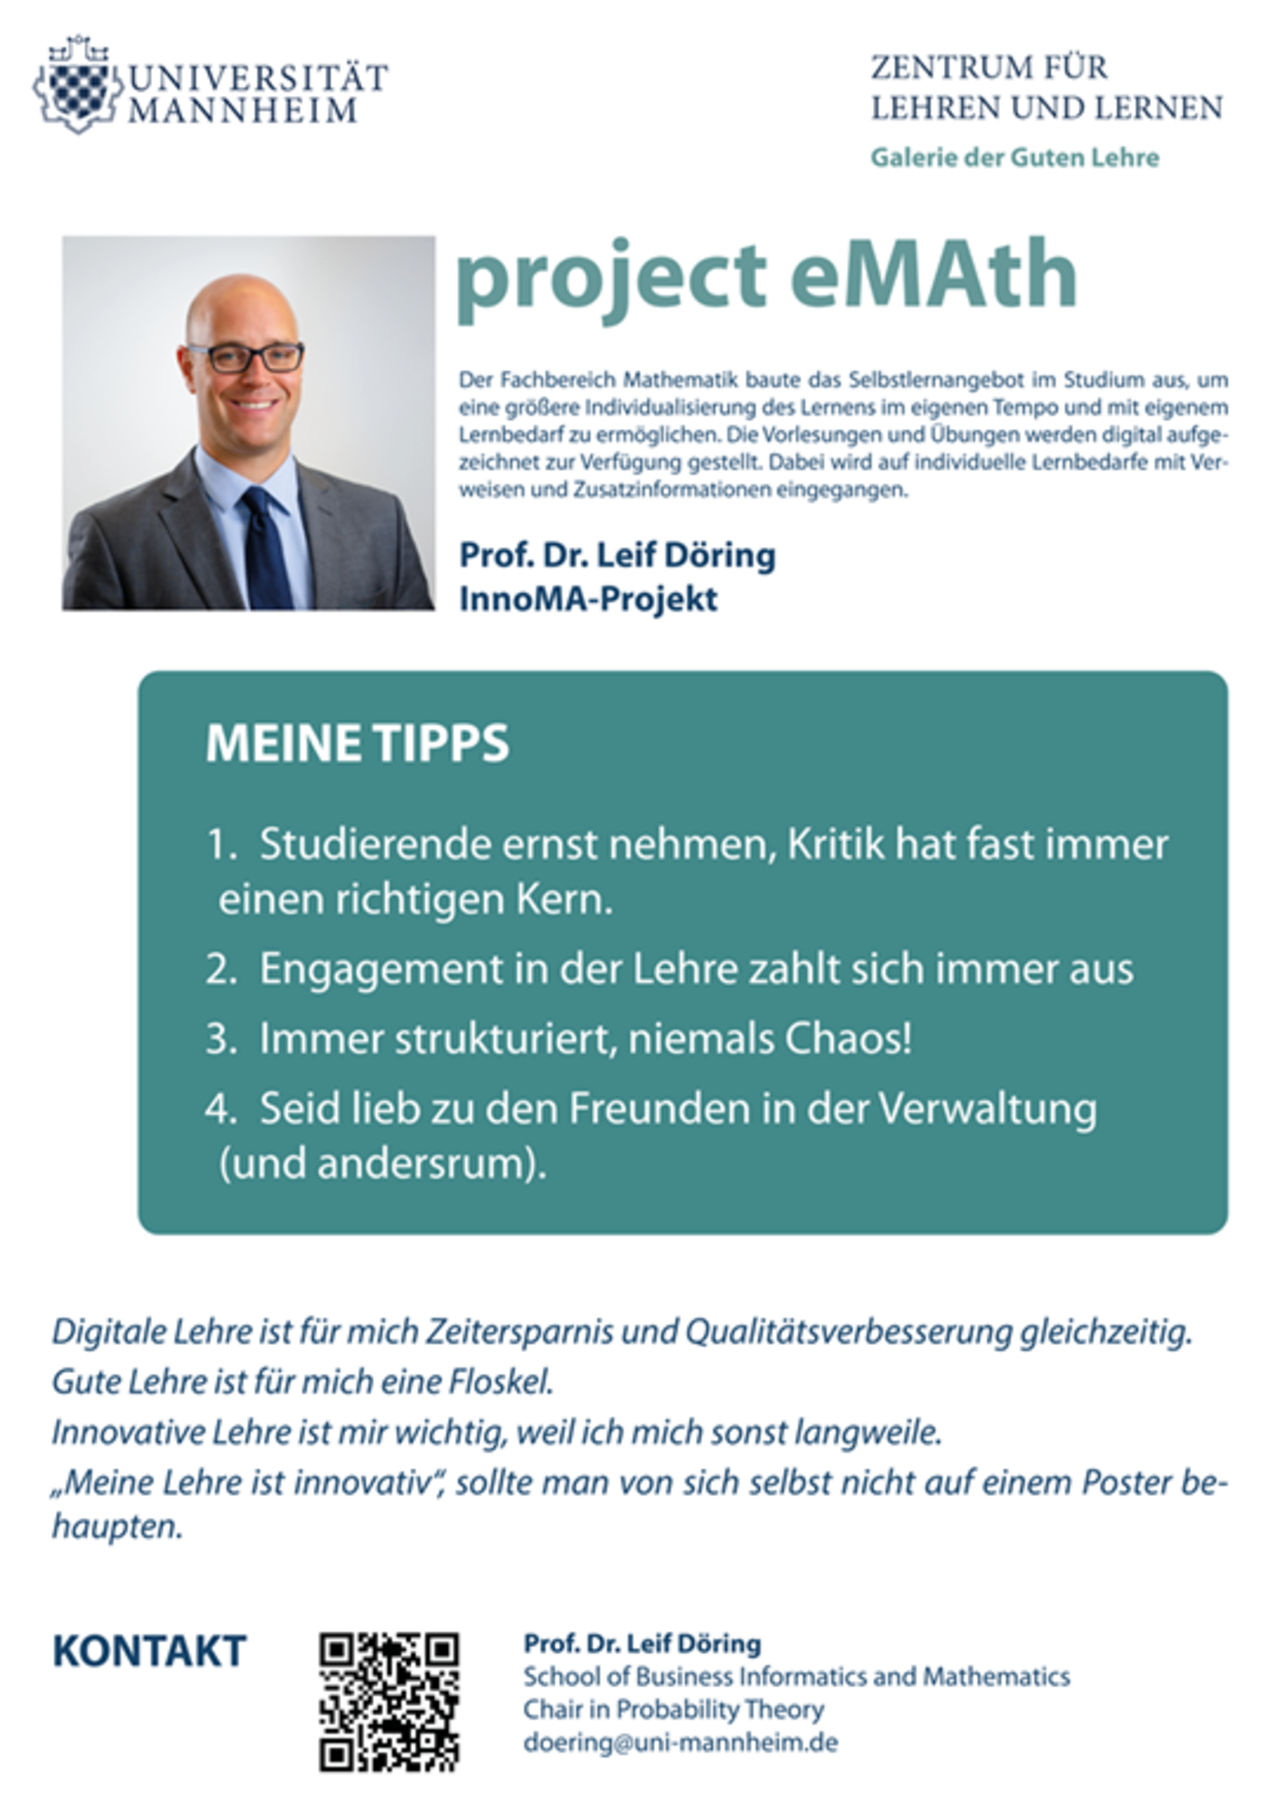 Project eMath von Professor Doktor Leif Döring.